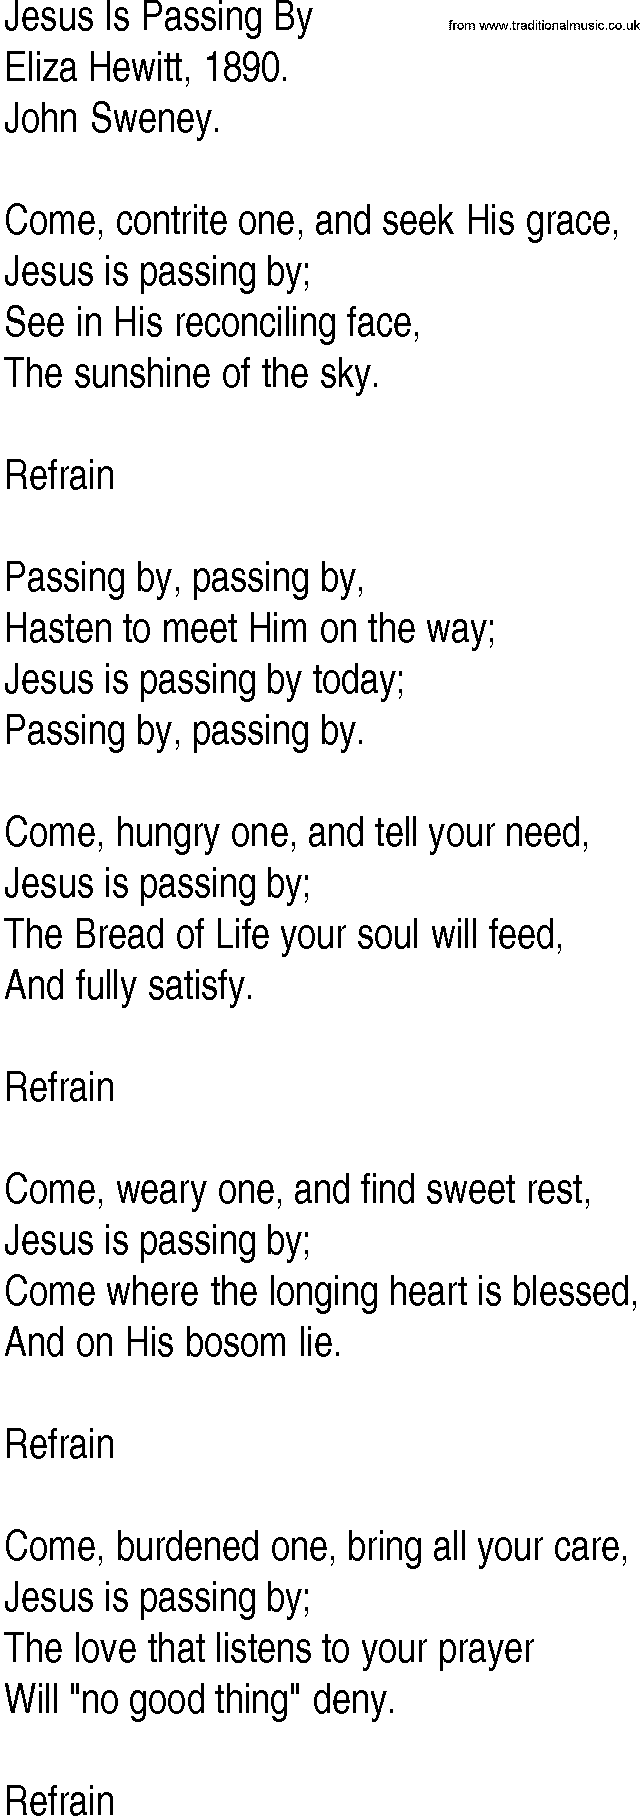 Hymn and Gospel Song: Jesus Is Passing By by Eliza Hewitt lyrics